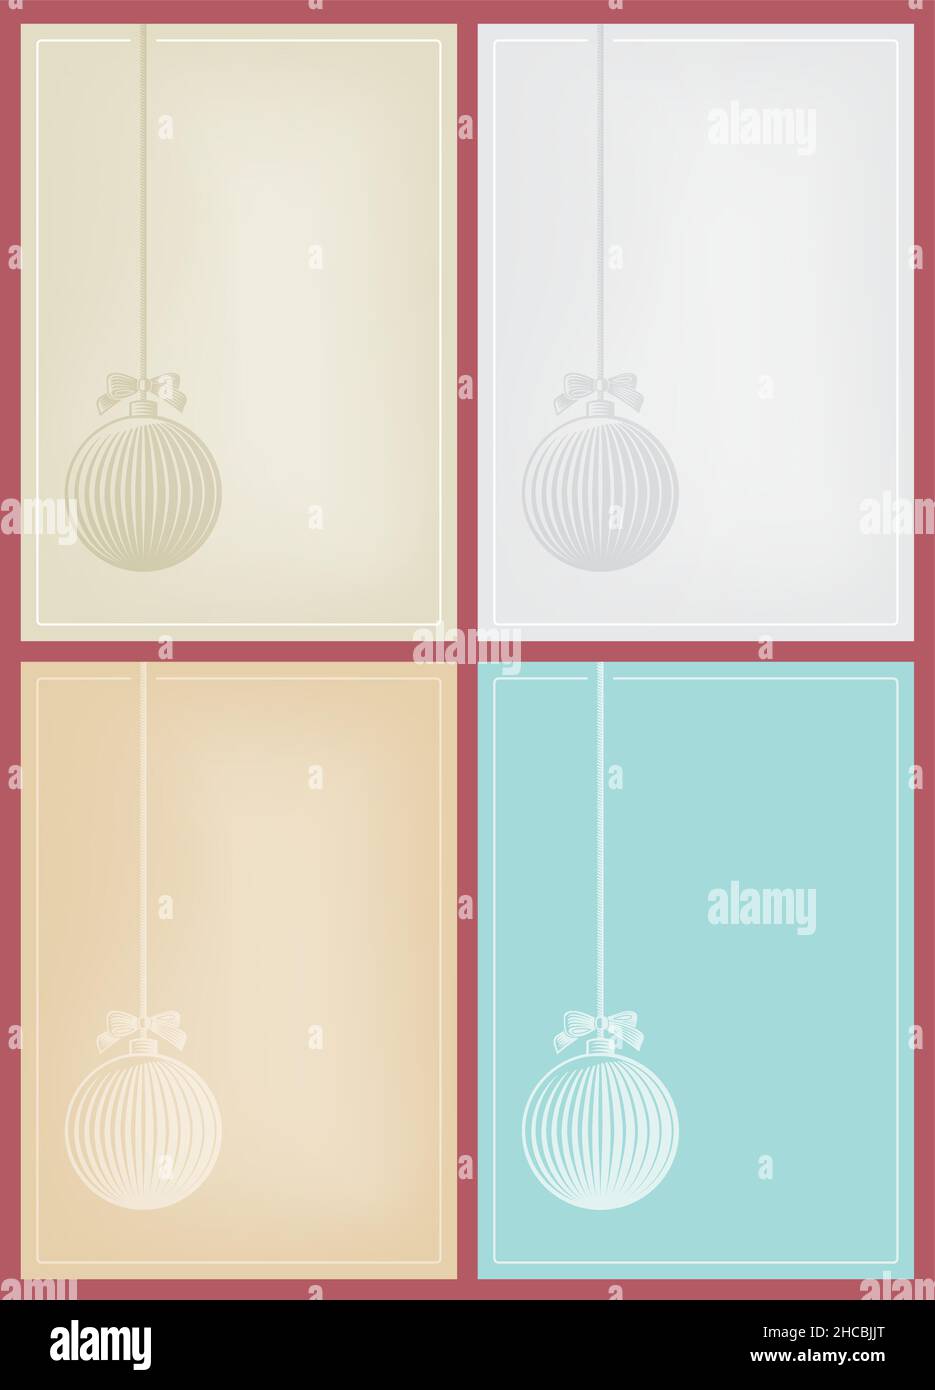 Vier Weihnachtskarten mit Kugel im Vektor-Holzschnitt-Stil. Stock Vektor